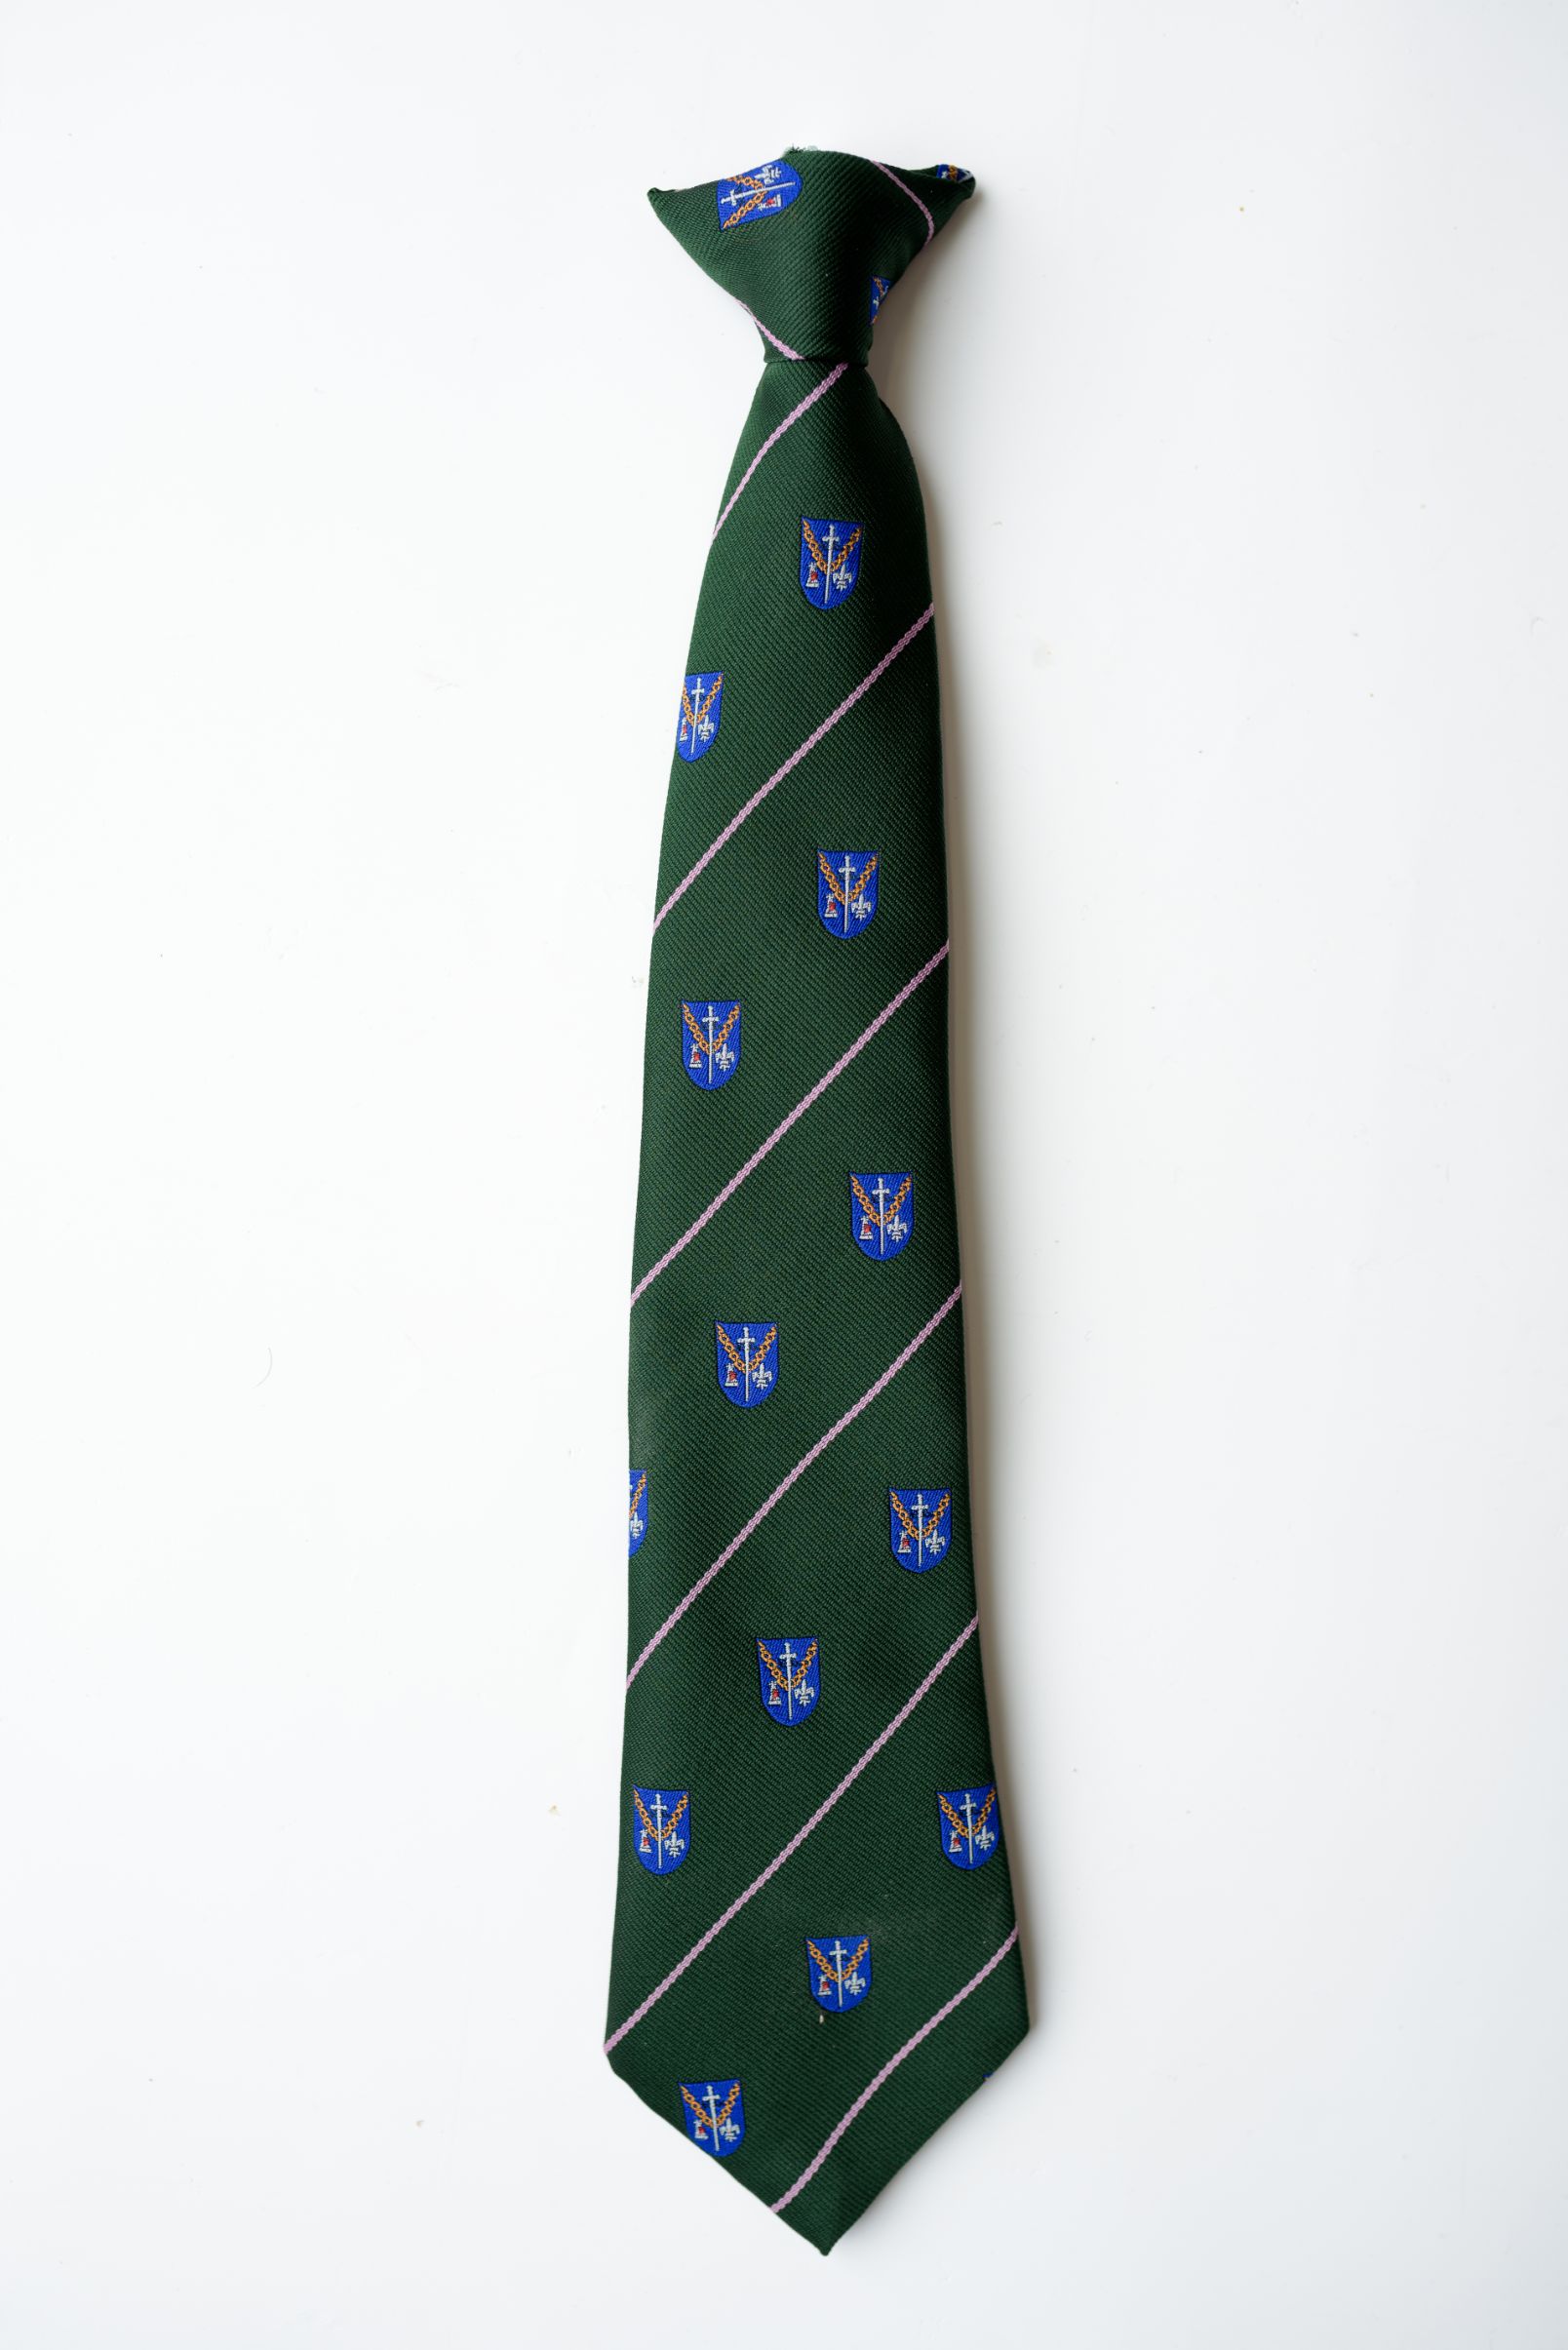 St Louis Grammar School Tie